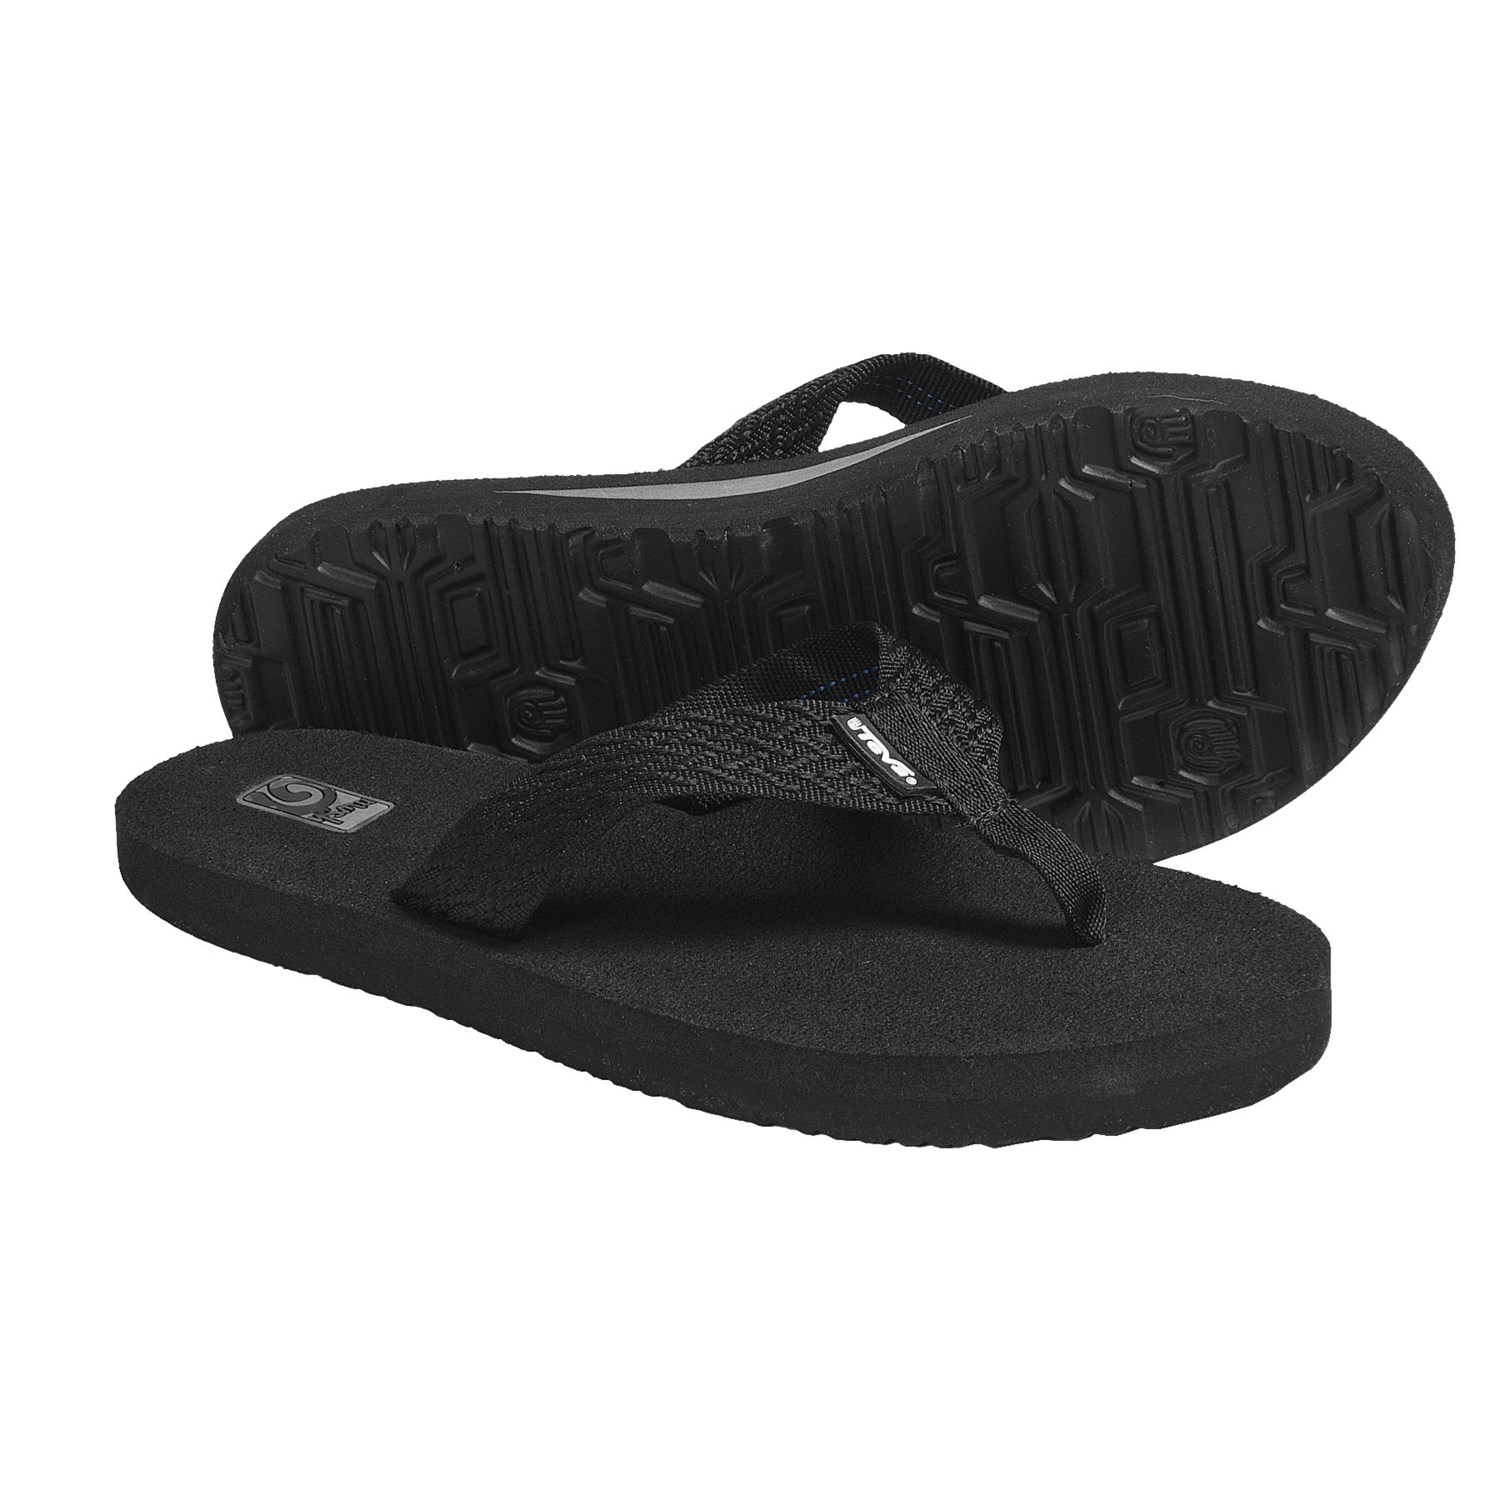 Teva Mush II Thong Sandals - Flip-Flops (For Women) in Tread Black